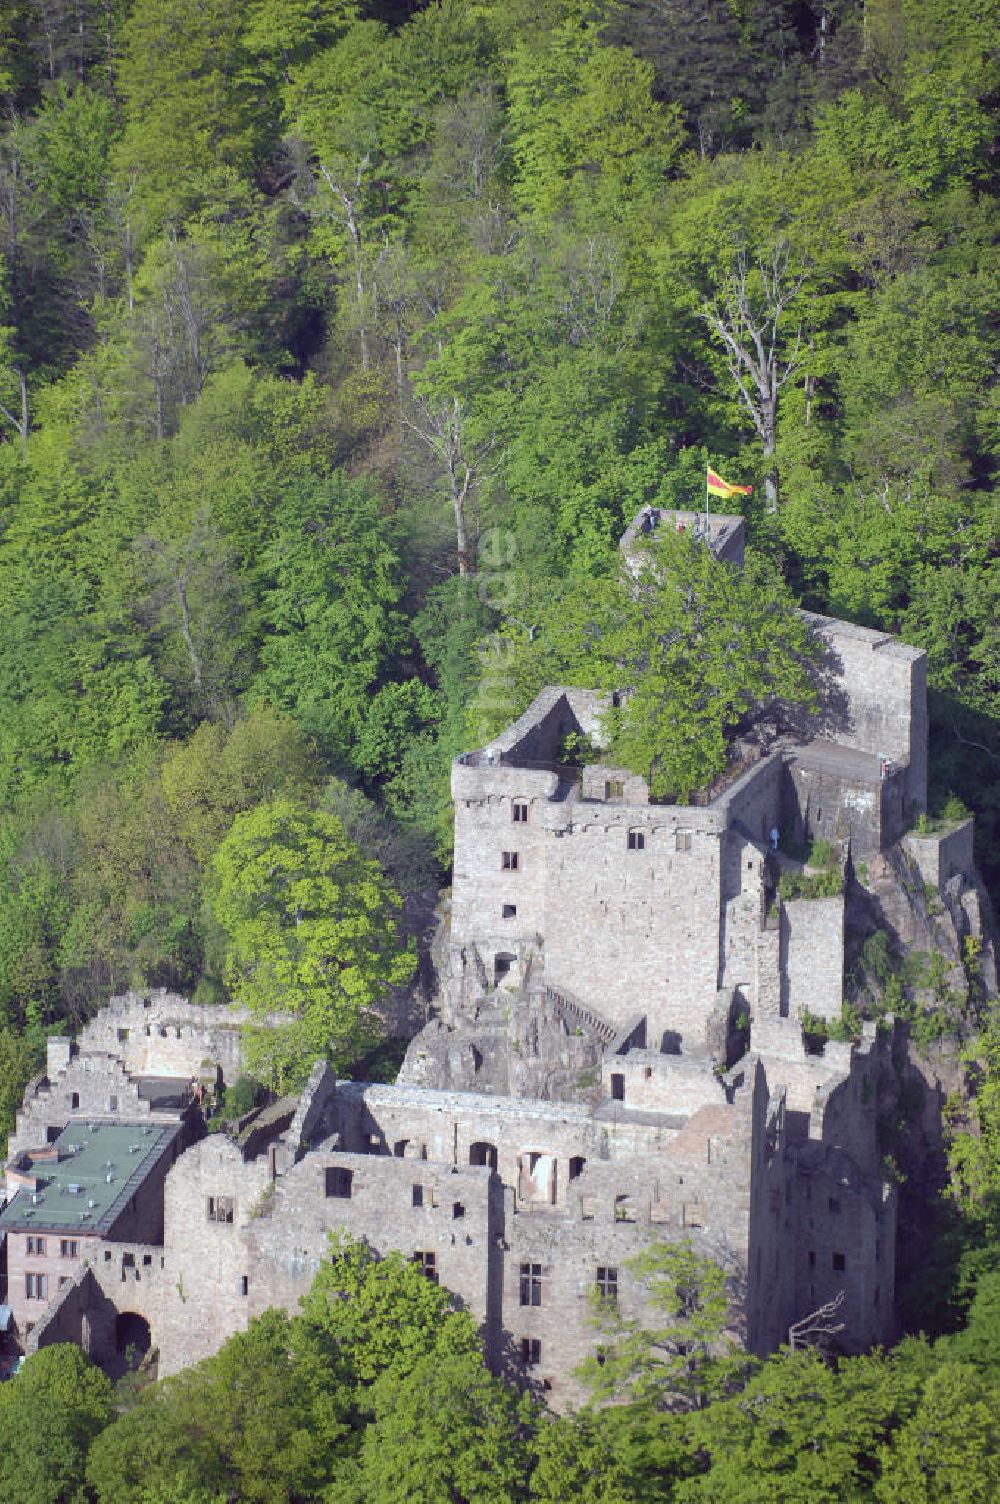 Luftaufnahme BADEN-BADEN - Schloss Hohenbaden bei Baden-Baden in Baden-Würtemberg